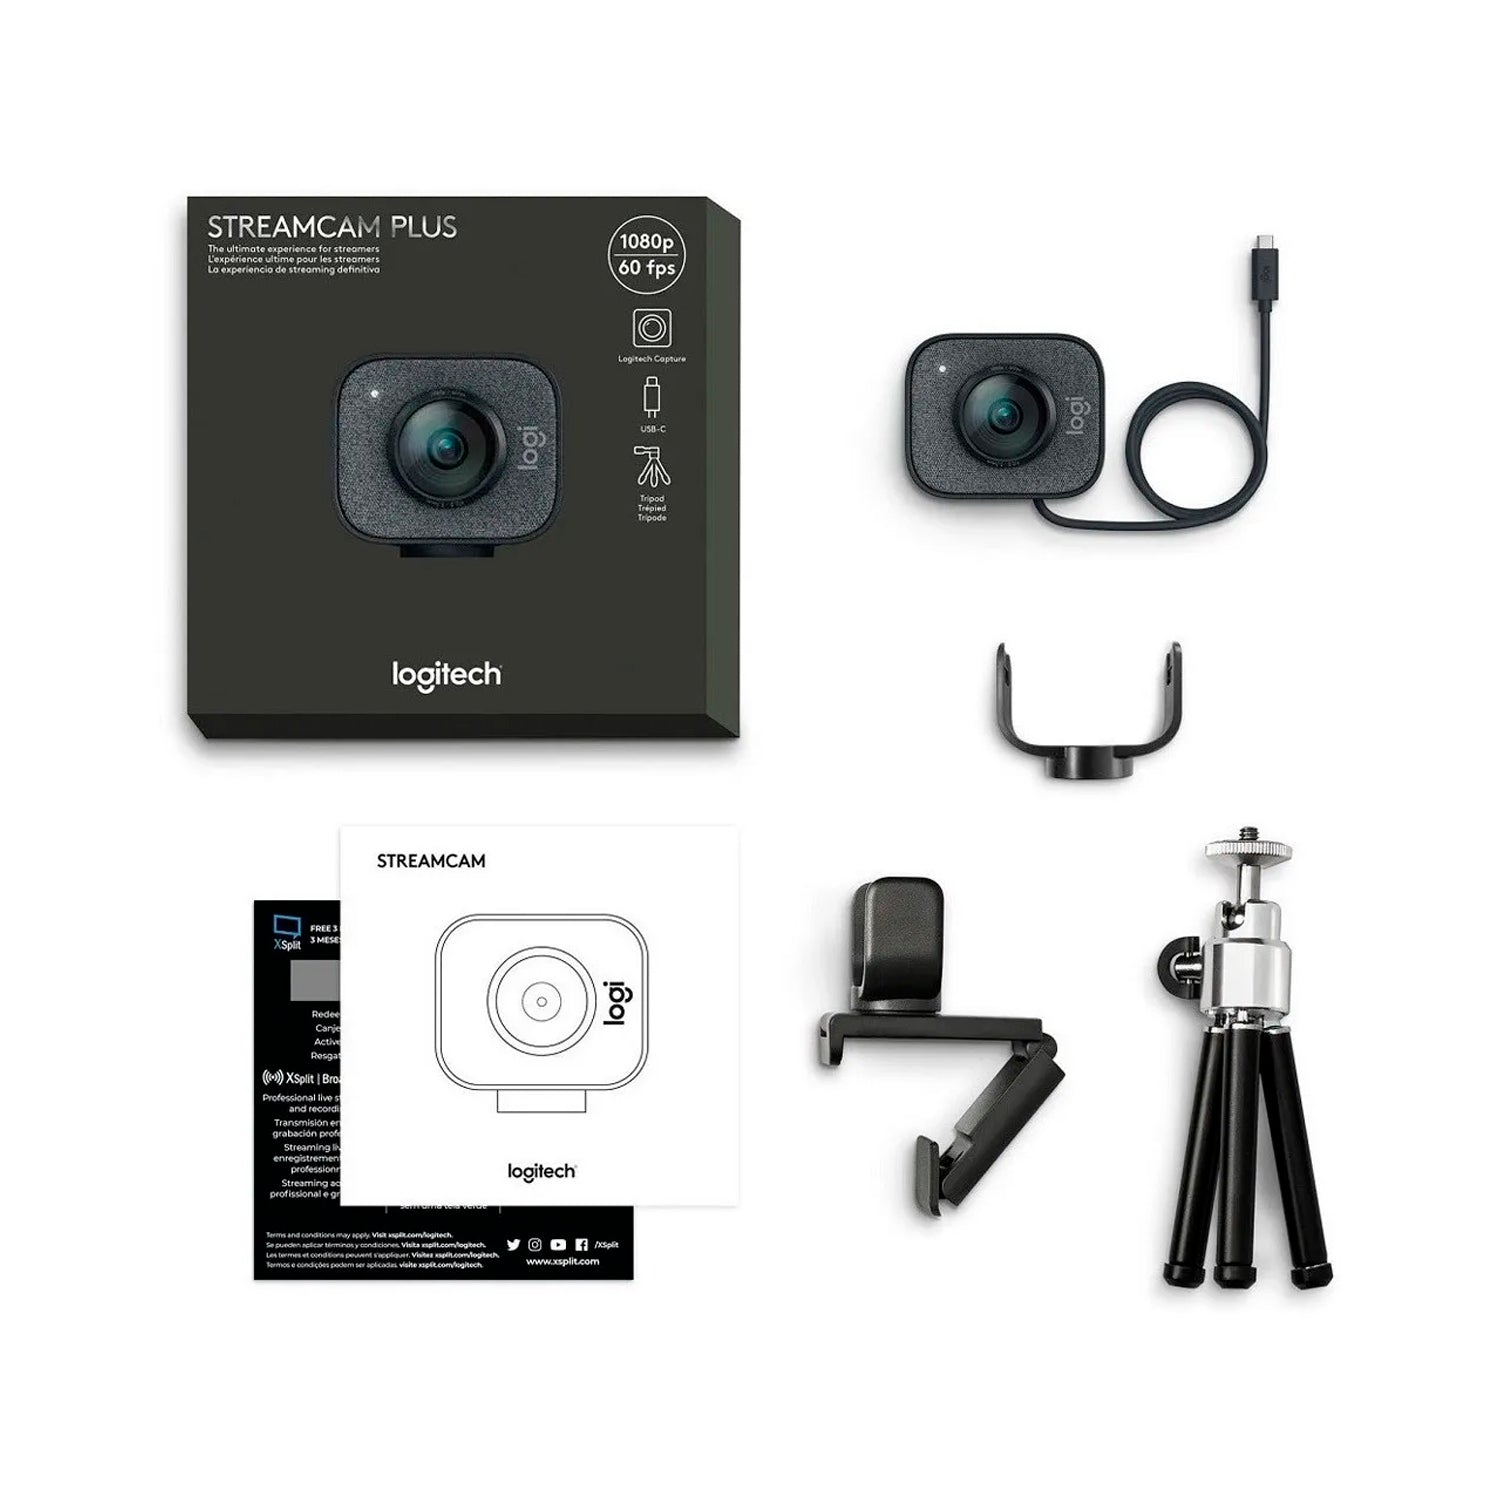 Cámara web Logitech Streamcam Plus Full HD 1080p a 60fps, Micrófono integrado, USB 3.1